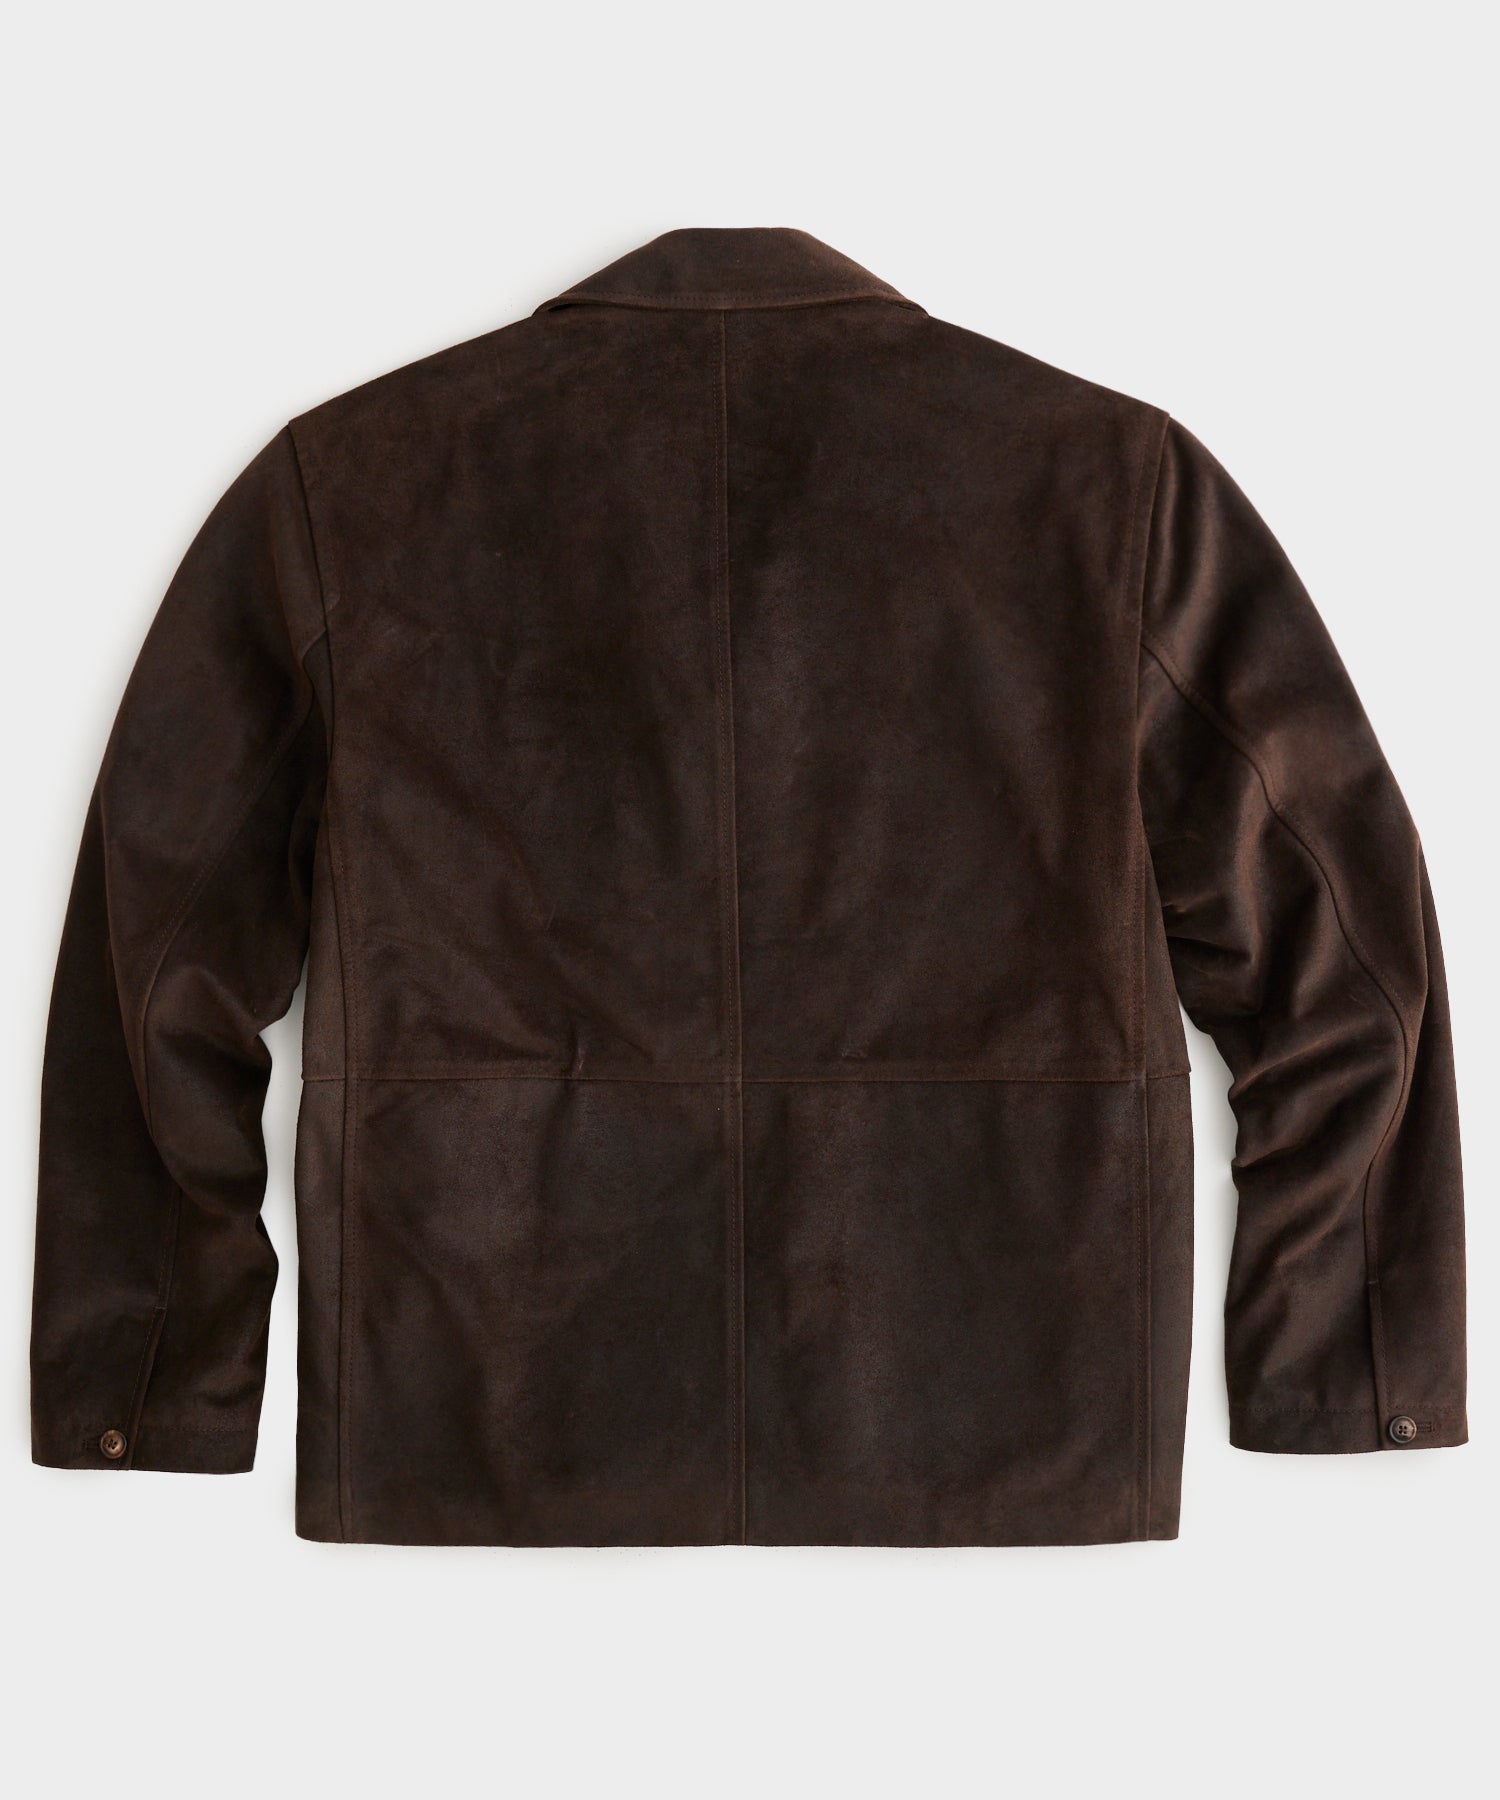 Italian Leather in Brown Jacket Dark Walking